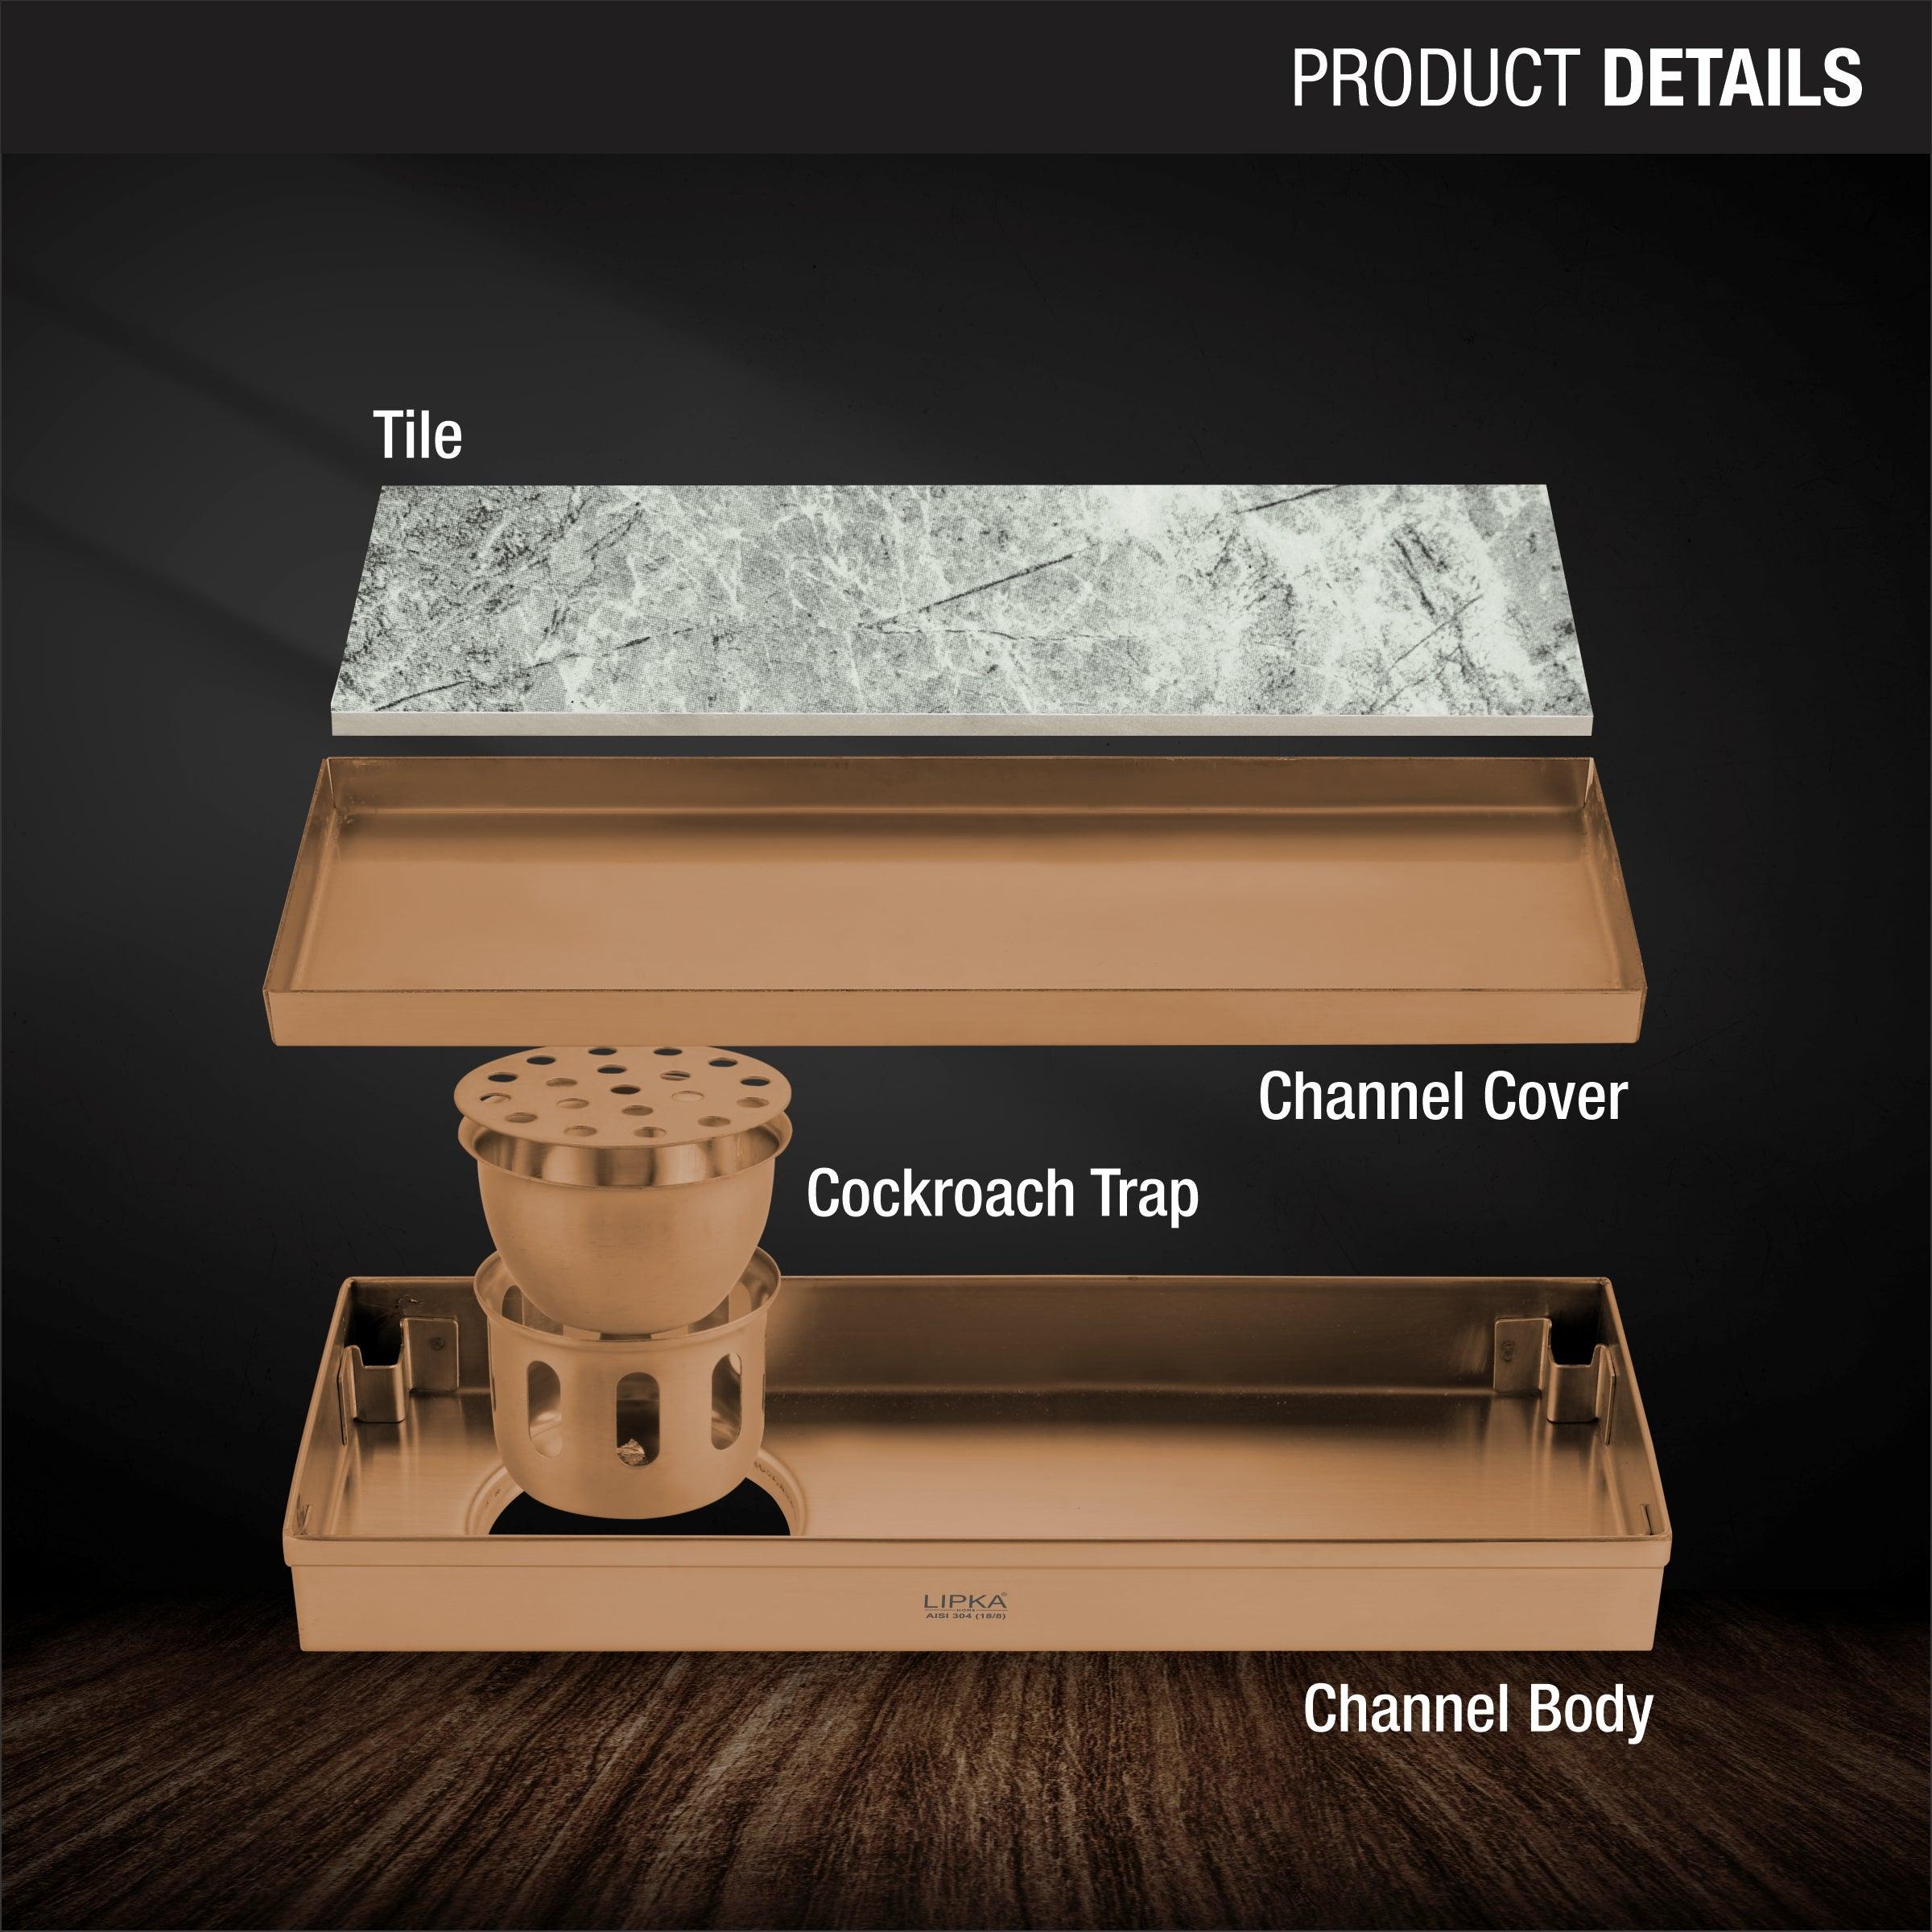 Tile Insert Shower Drain Channel - Antique Copper (12 x 5 Inches) product details